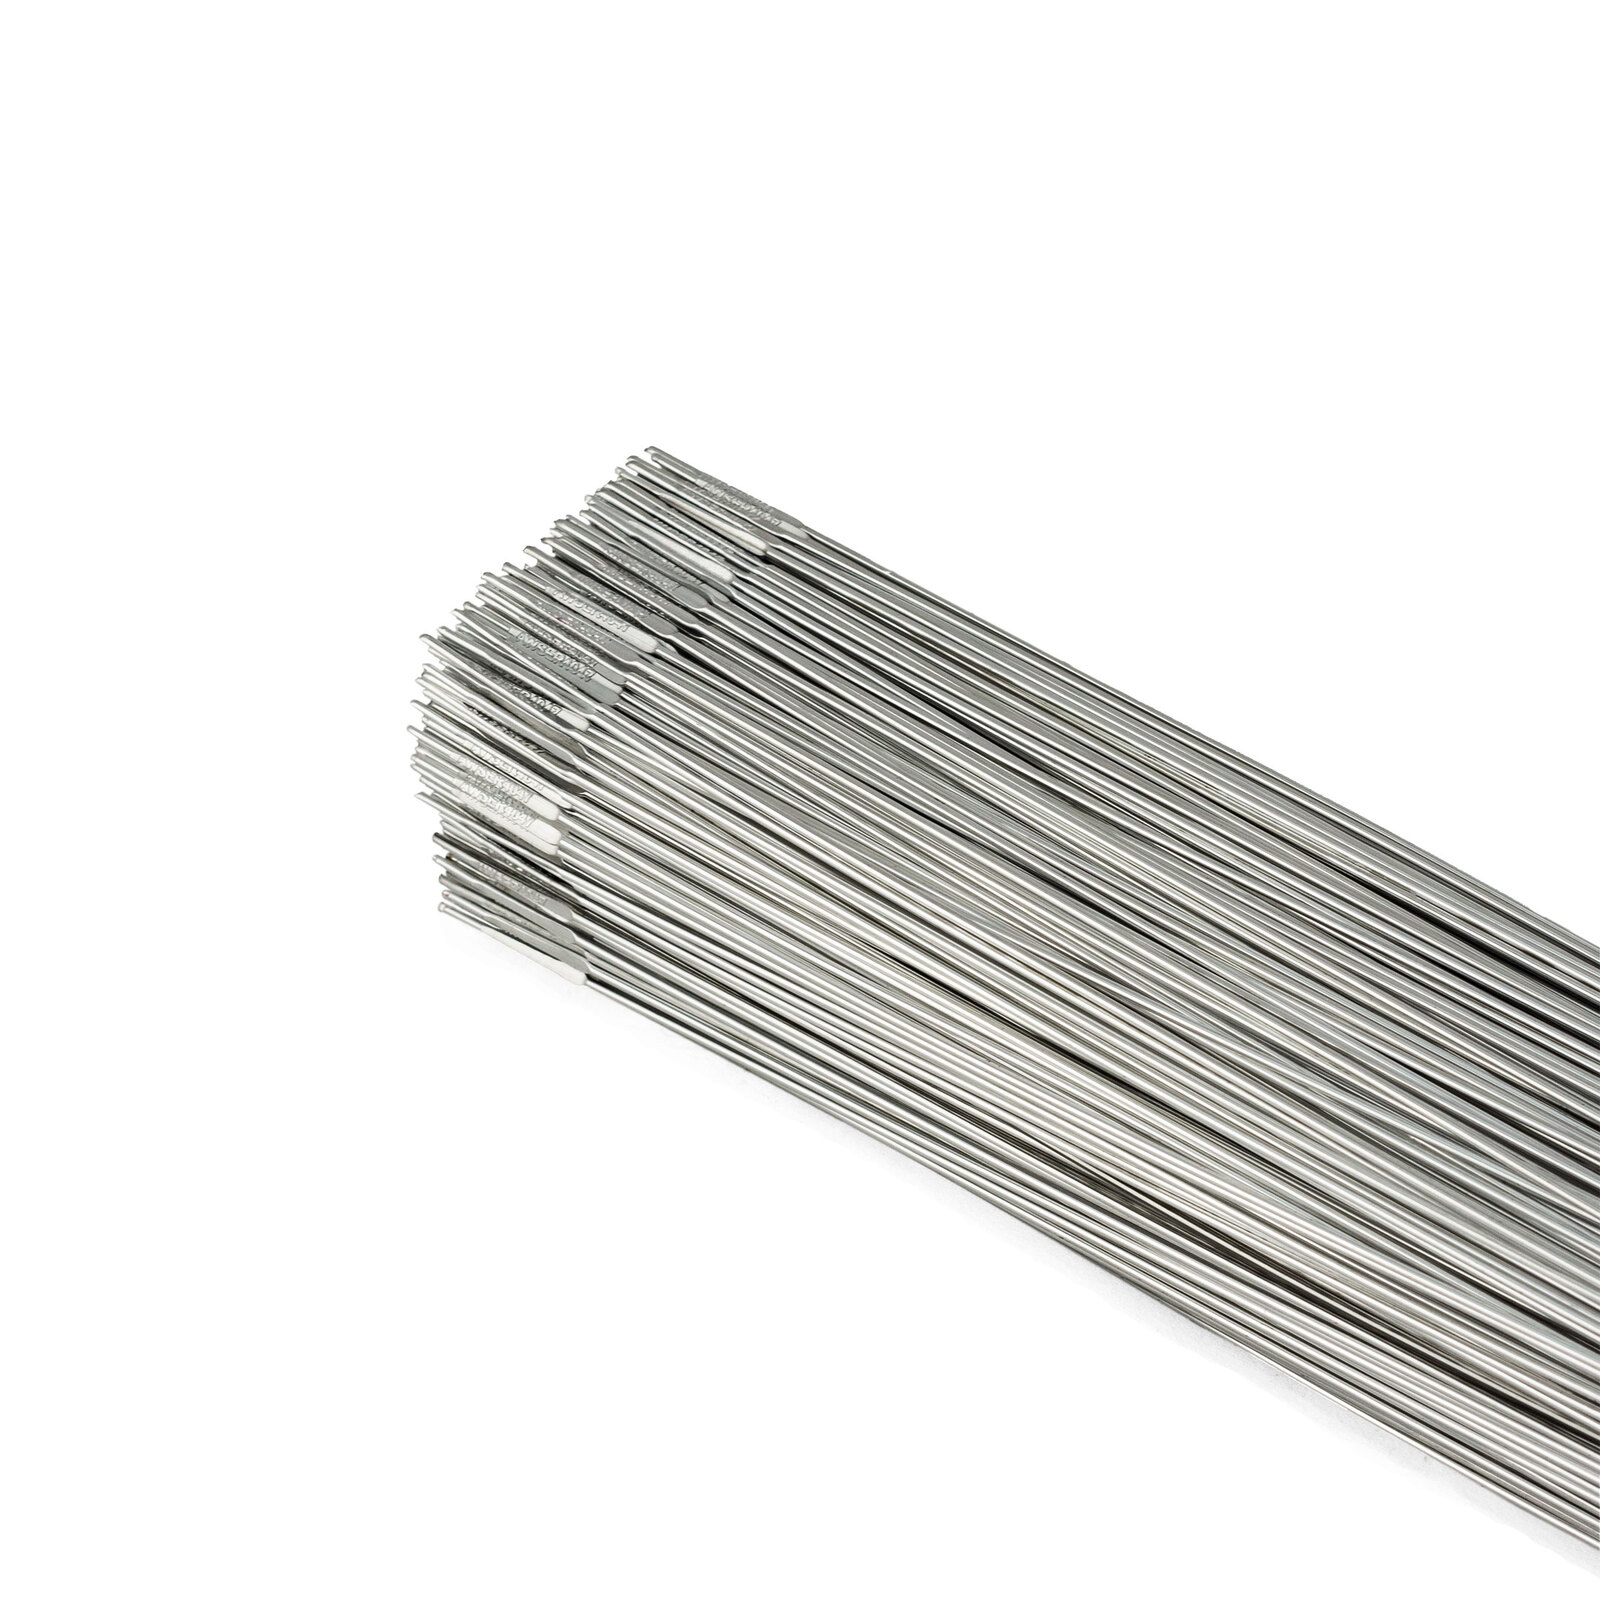 1.6mm Aluminium TIG Filler Rods 5kg - ER4047 - Welding Wire - Aluminum ...